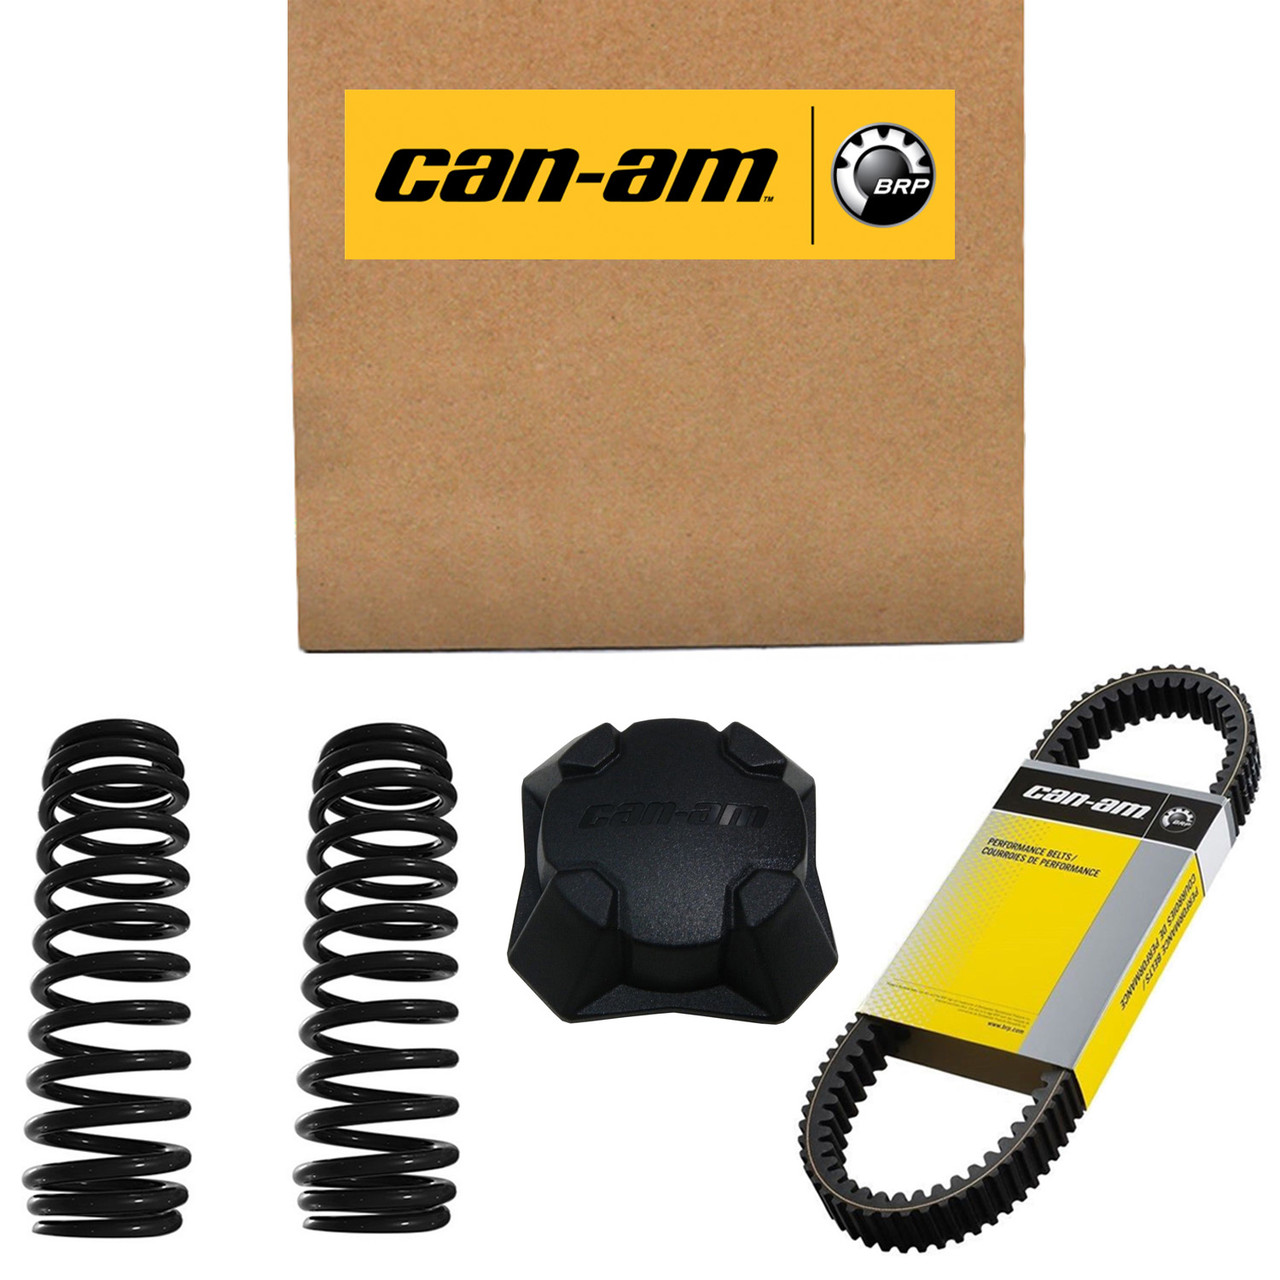 Can-Am New OEM Gear Box, 420686217